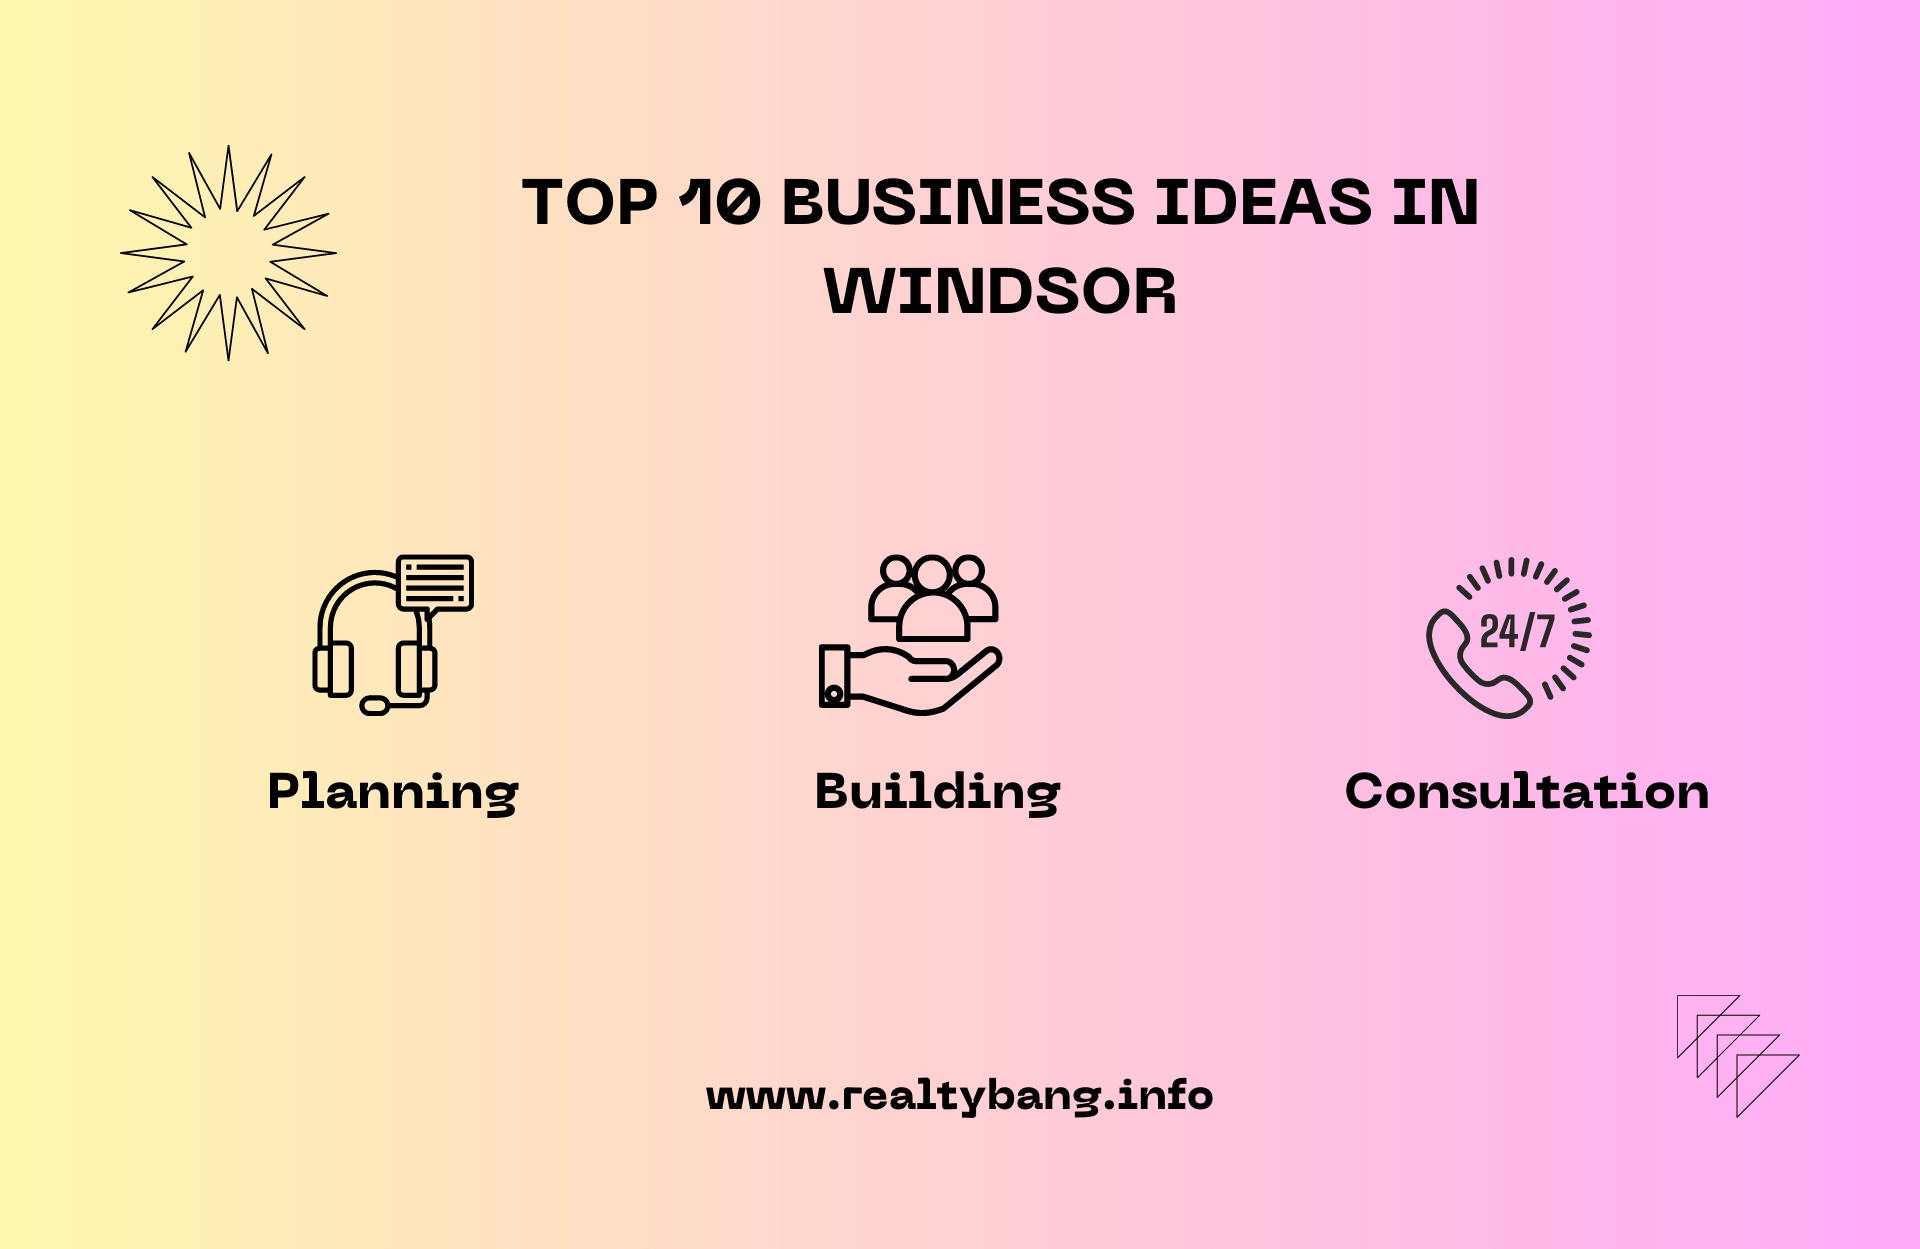 TOP 10 BUSINESS IDEAS IN WINDSOR